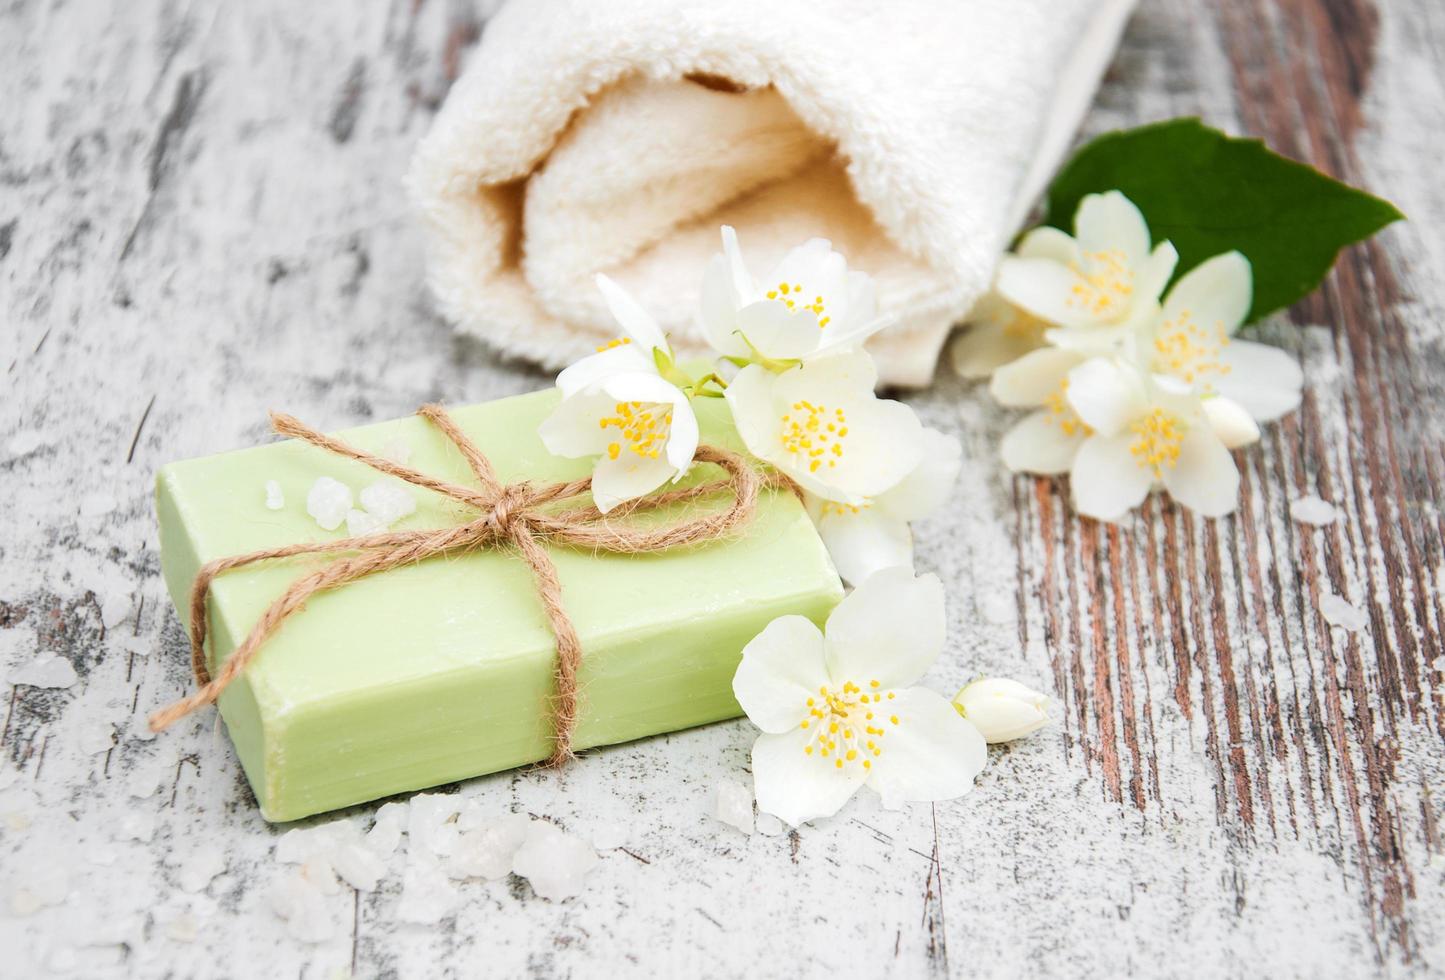 Handmade soap and jasmine flowers photo